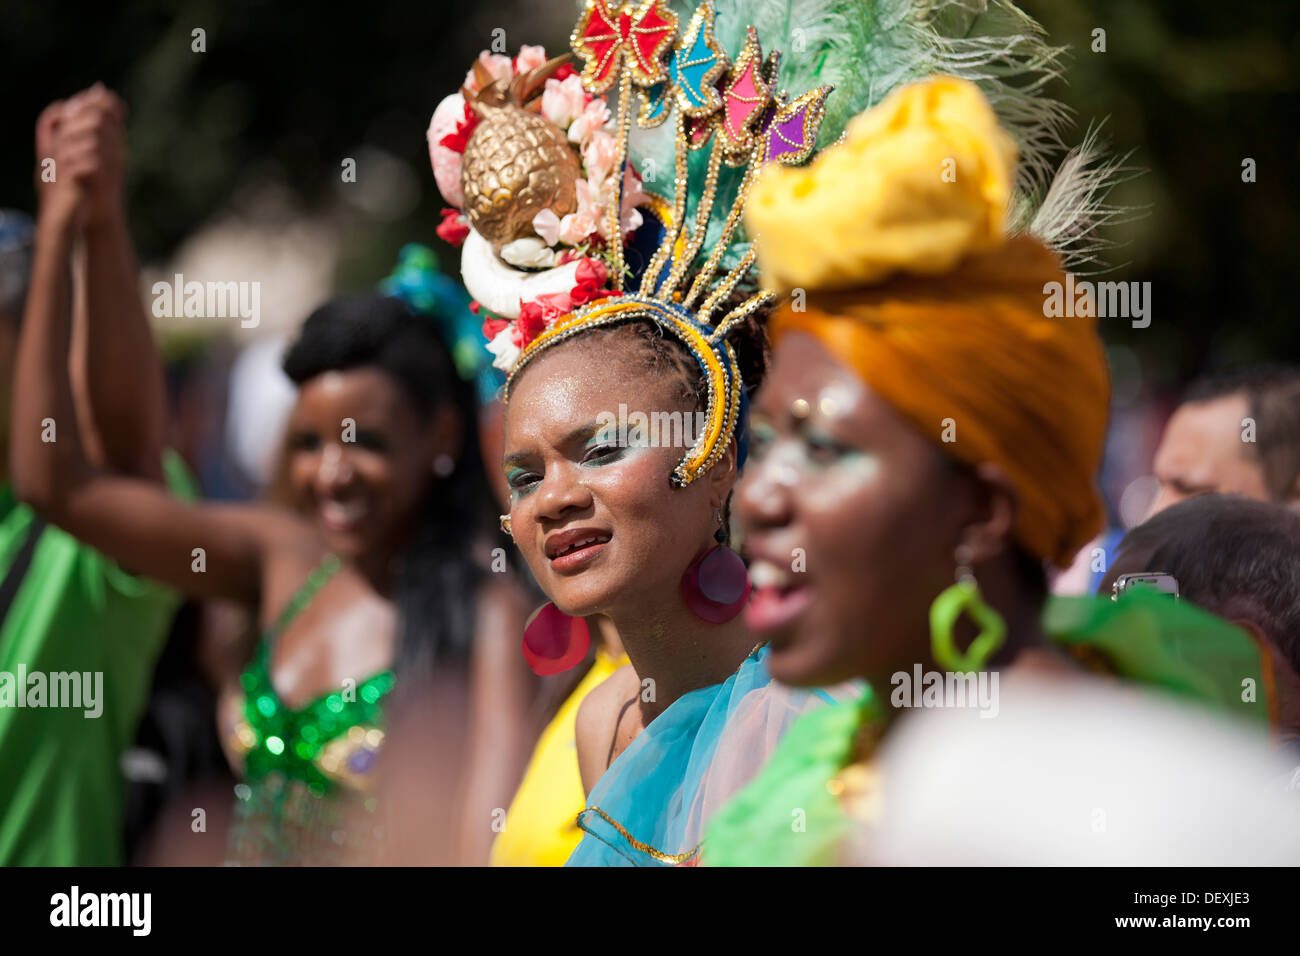 Samba brasileño bailarina en traje tradicional Foto de stock